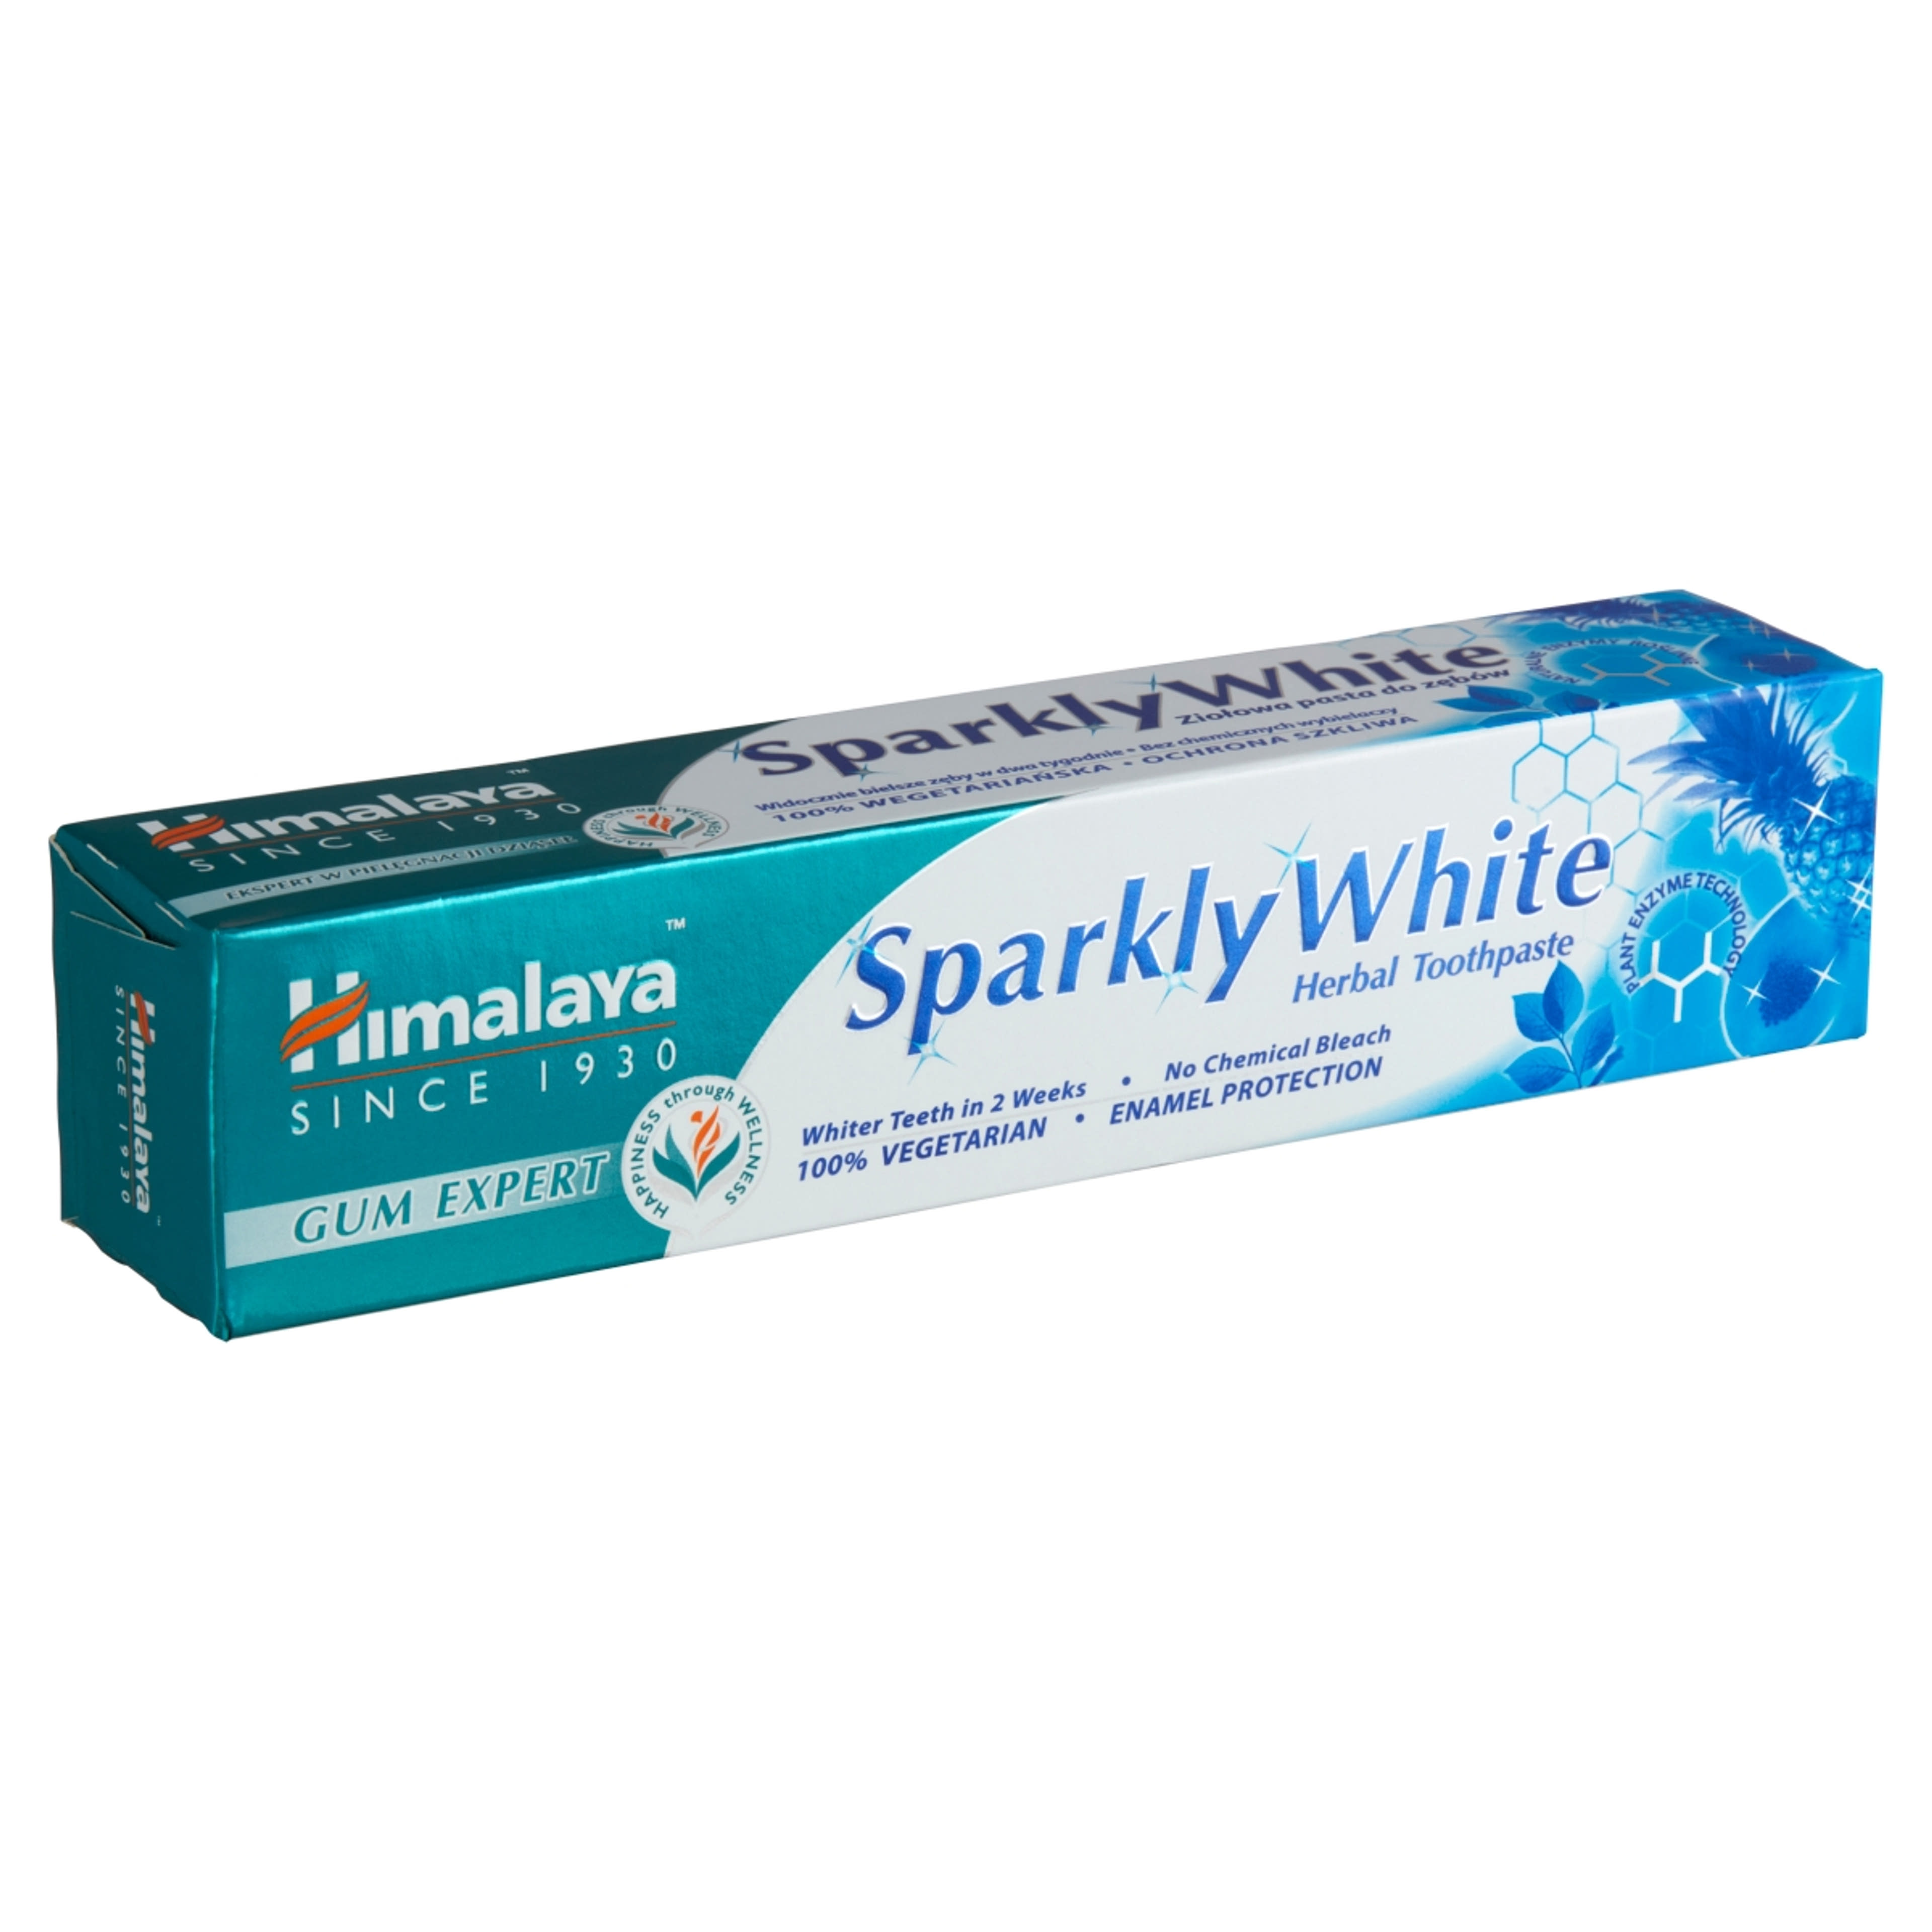 Himalaya Gum Expert Sparkly White fogkrém - 75 ml-2